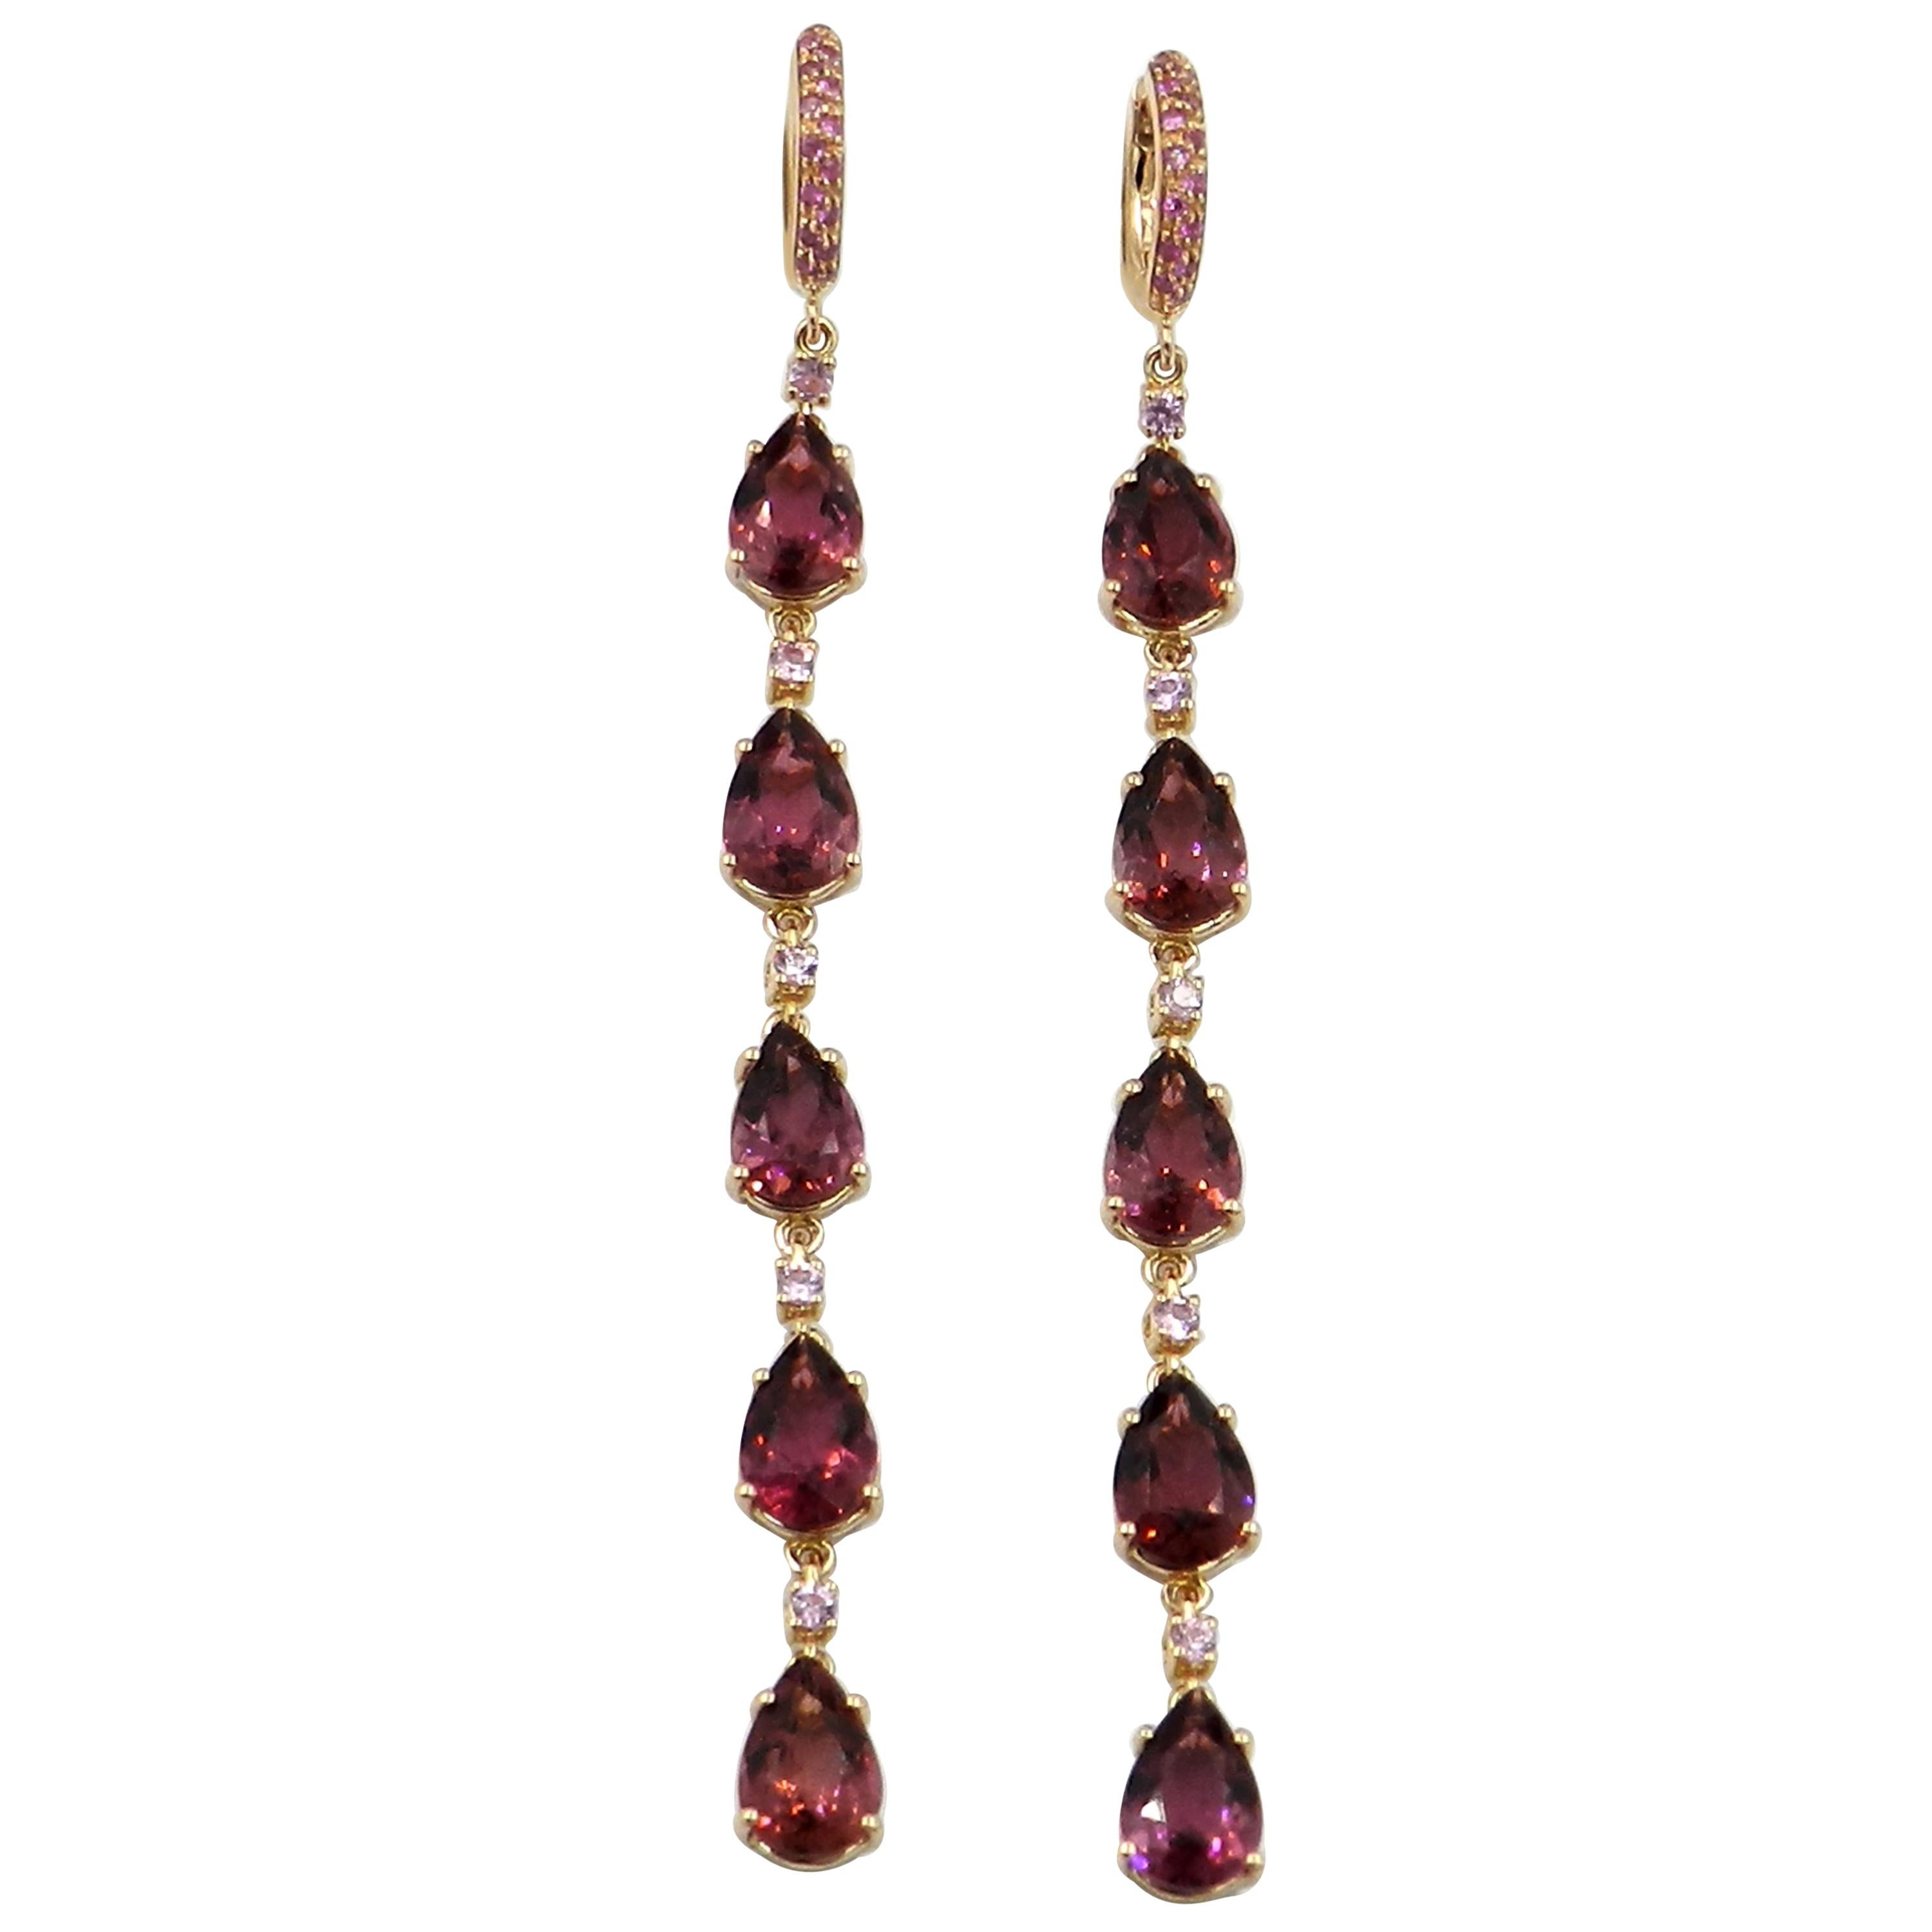 18 Karat Rose Gold Pink Tourmaline and Pink Sapphires Long Garavelli Earrings